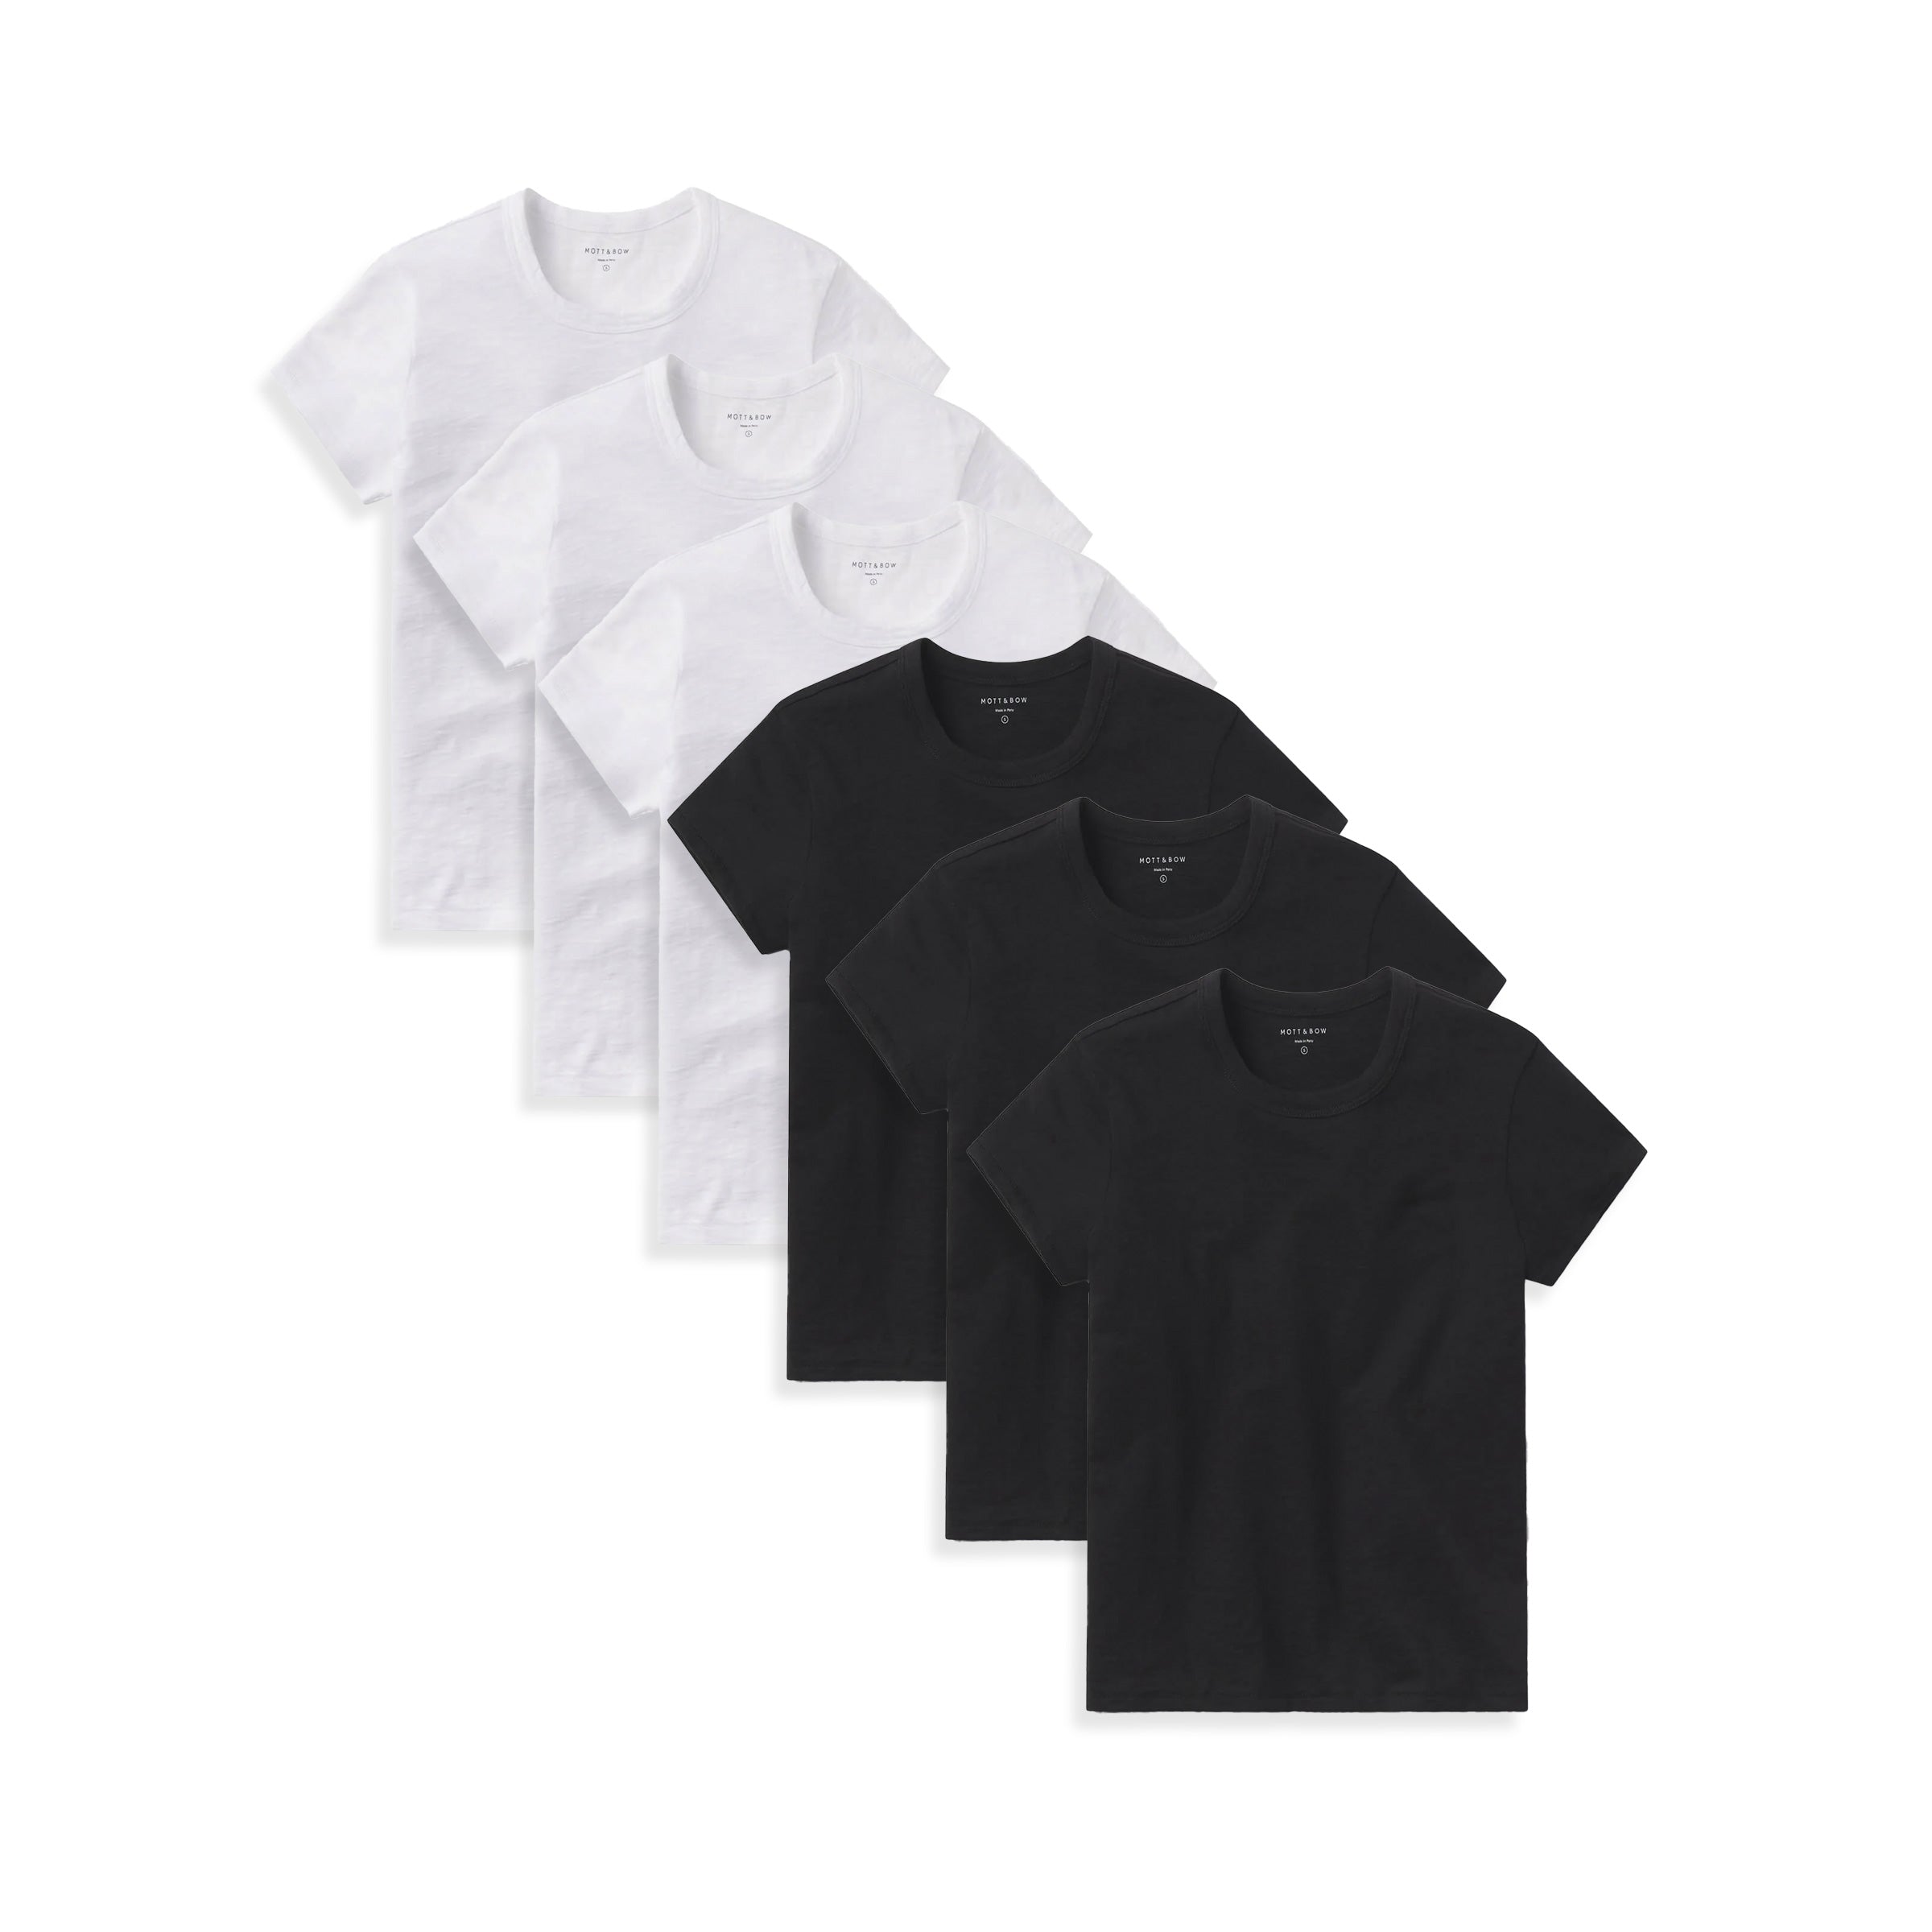 Women wearing White/Black Classic Crew Slub 6-Pack tees